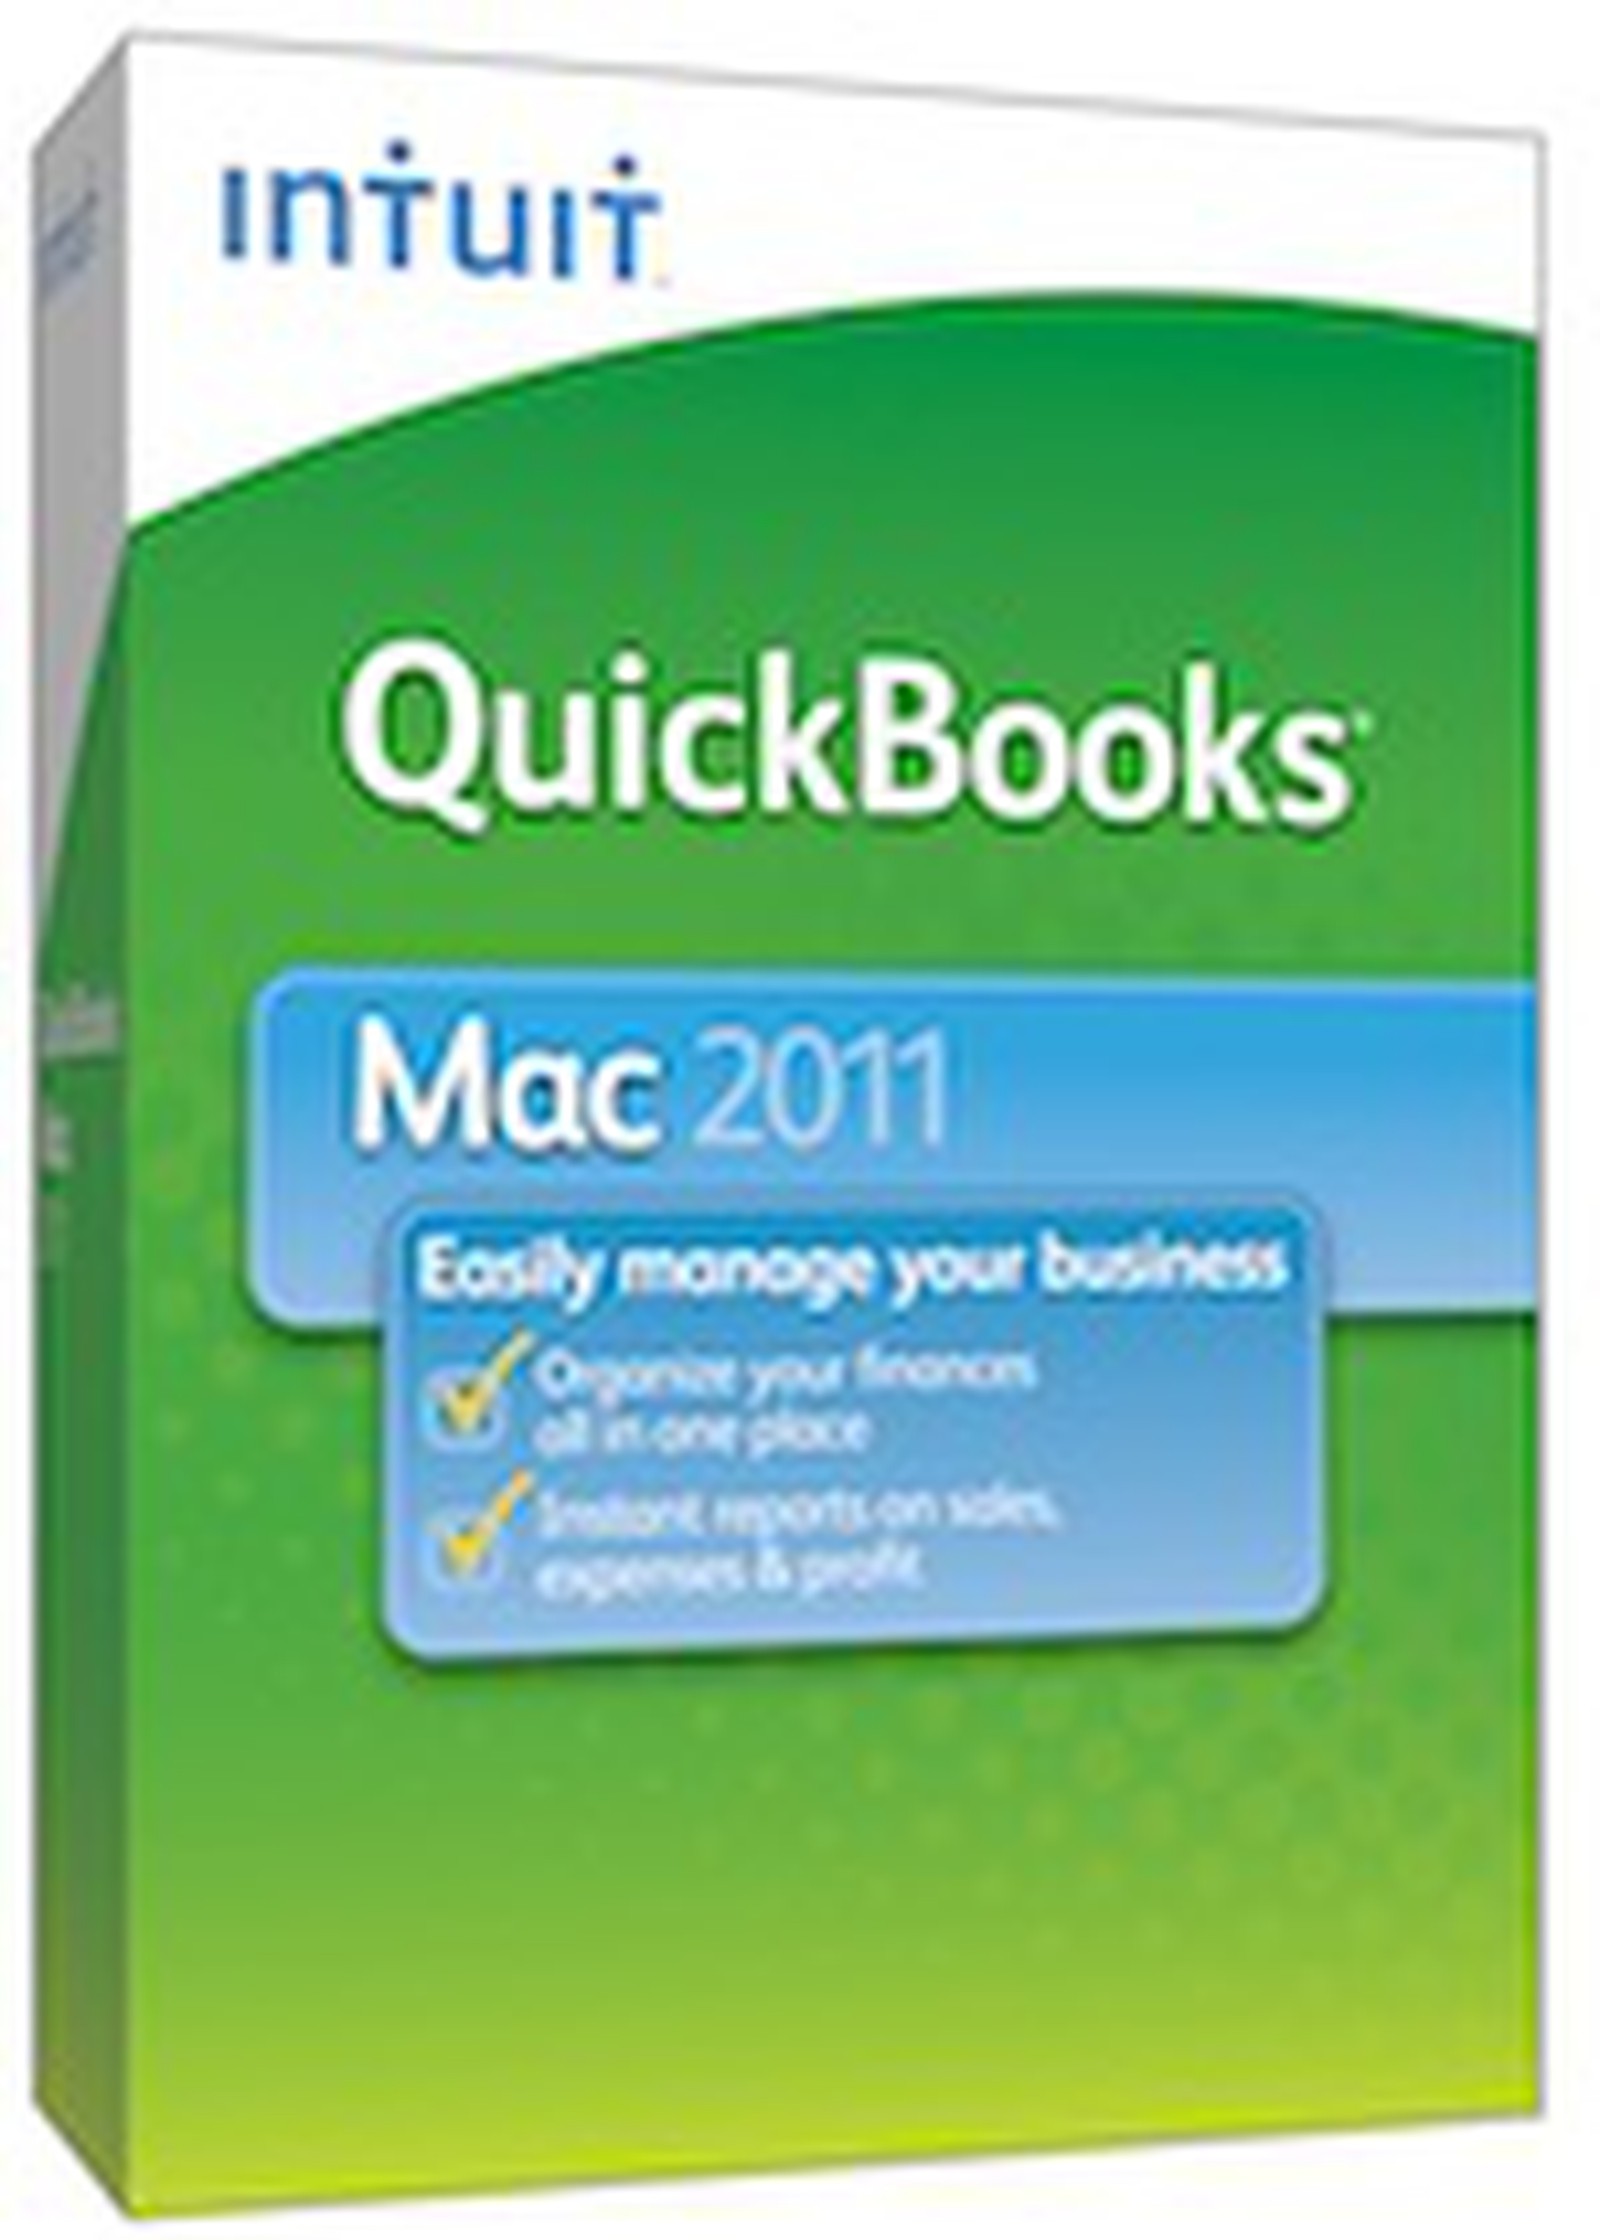 save a quickbooks file for mac